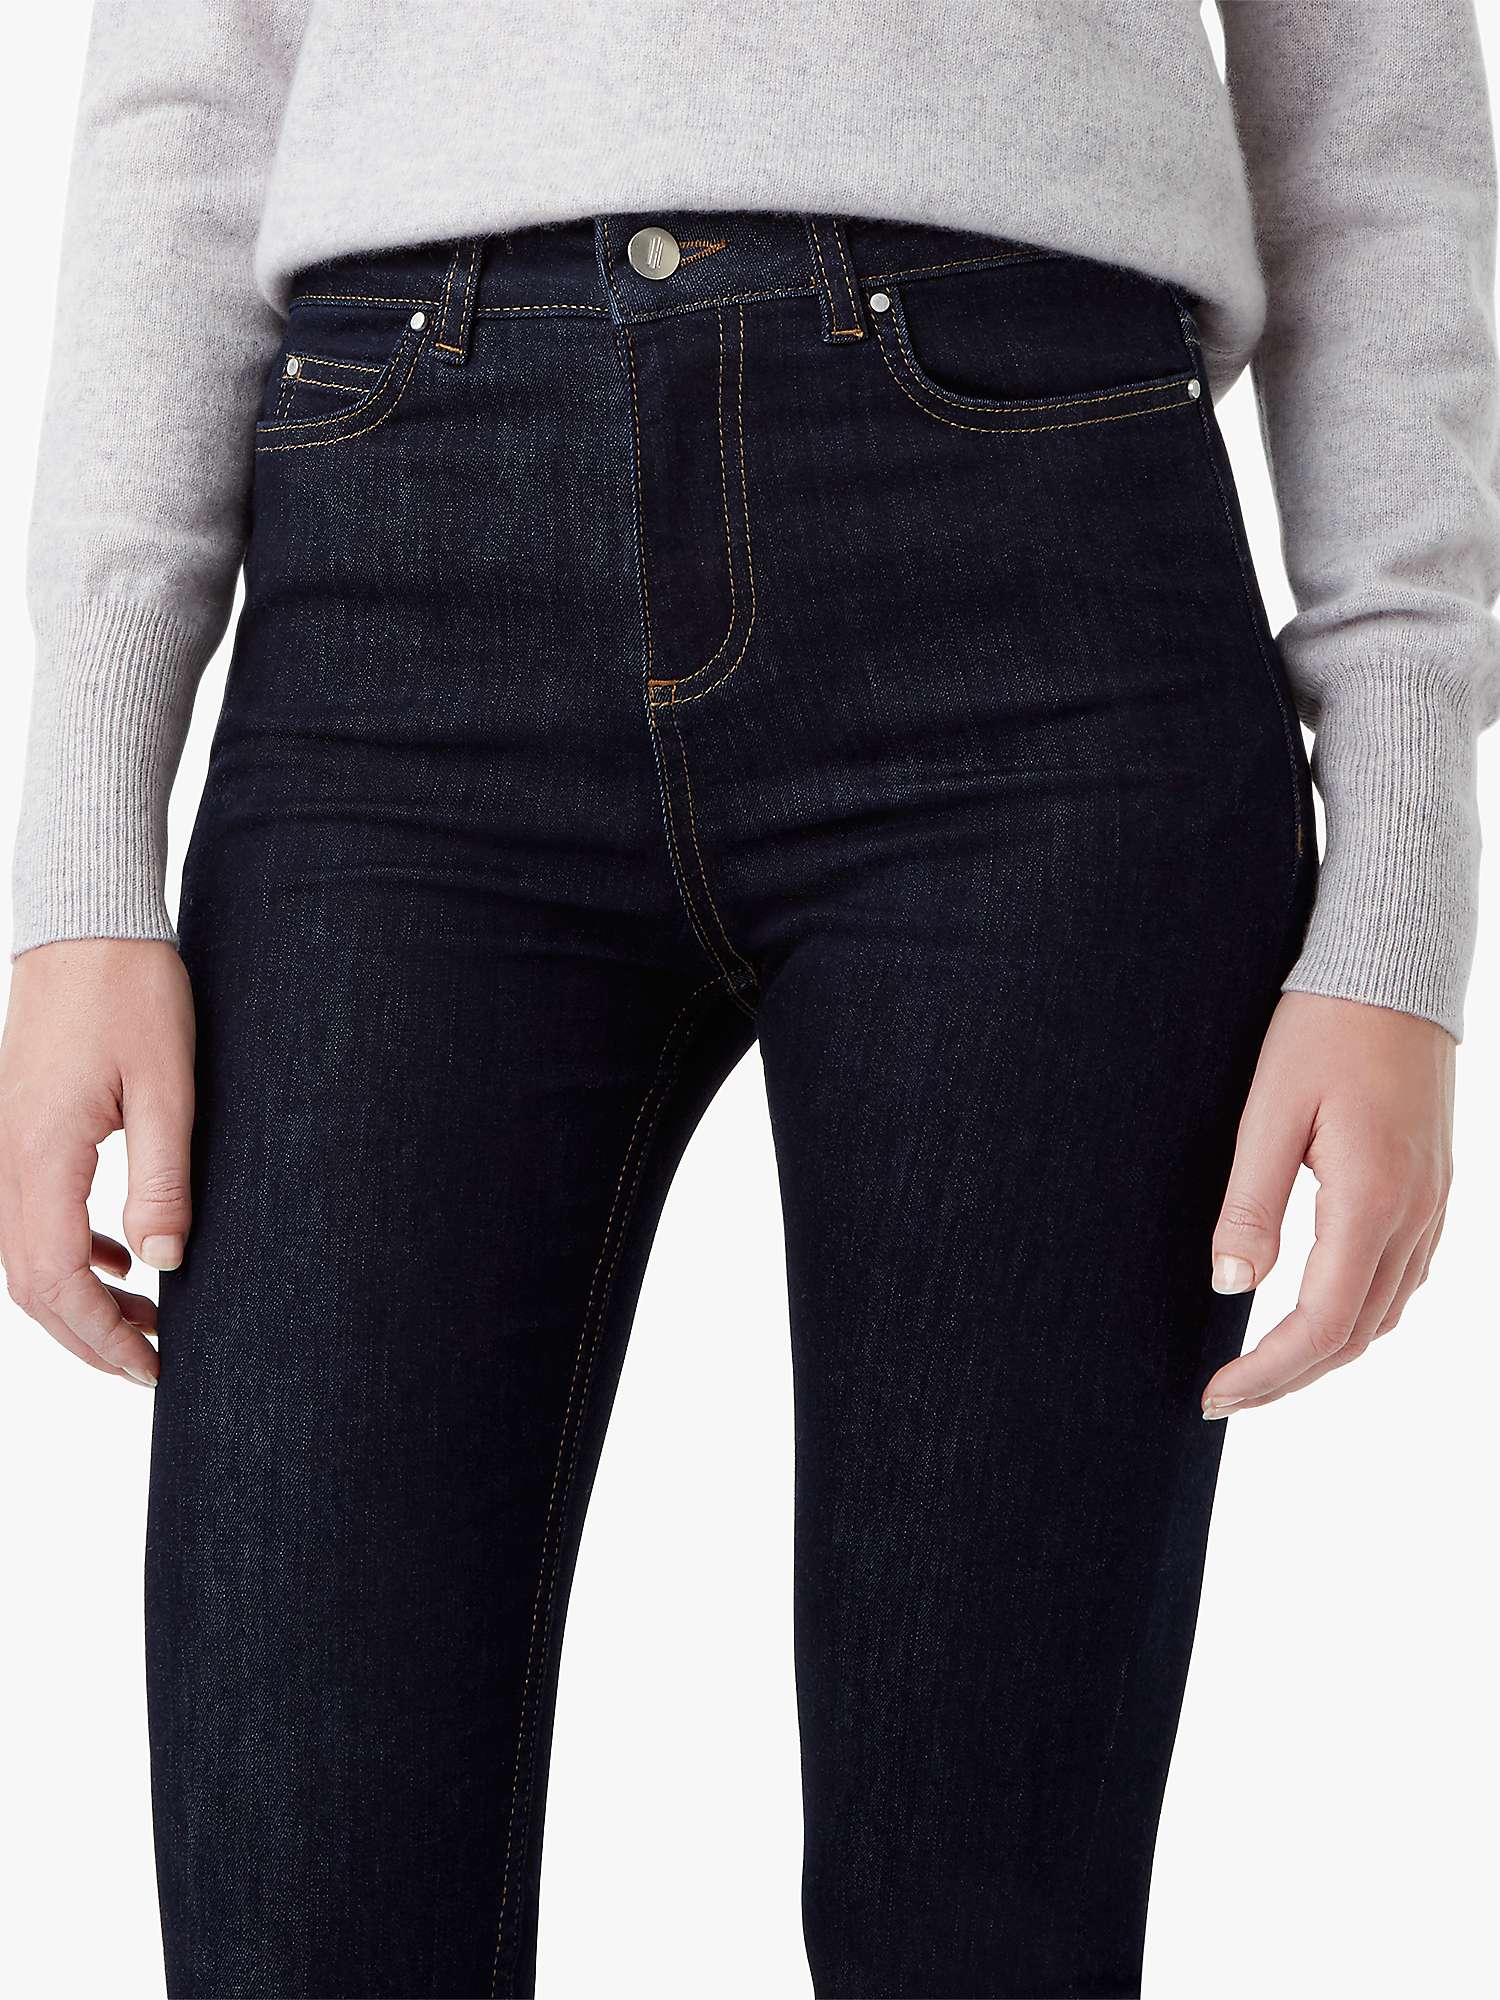 Buy Hobbs Petite Gia Skinny Jeans Online at johnlewis.com